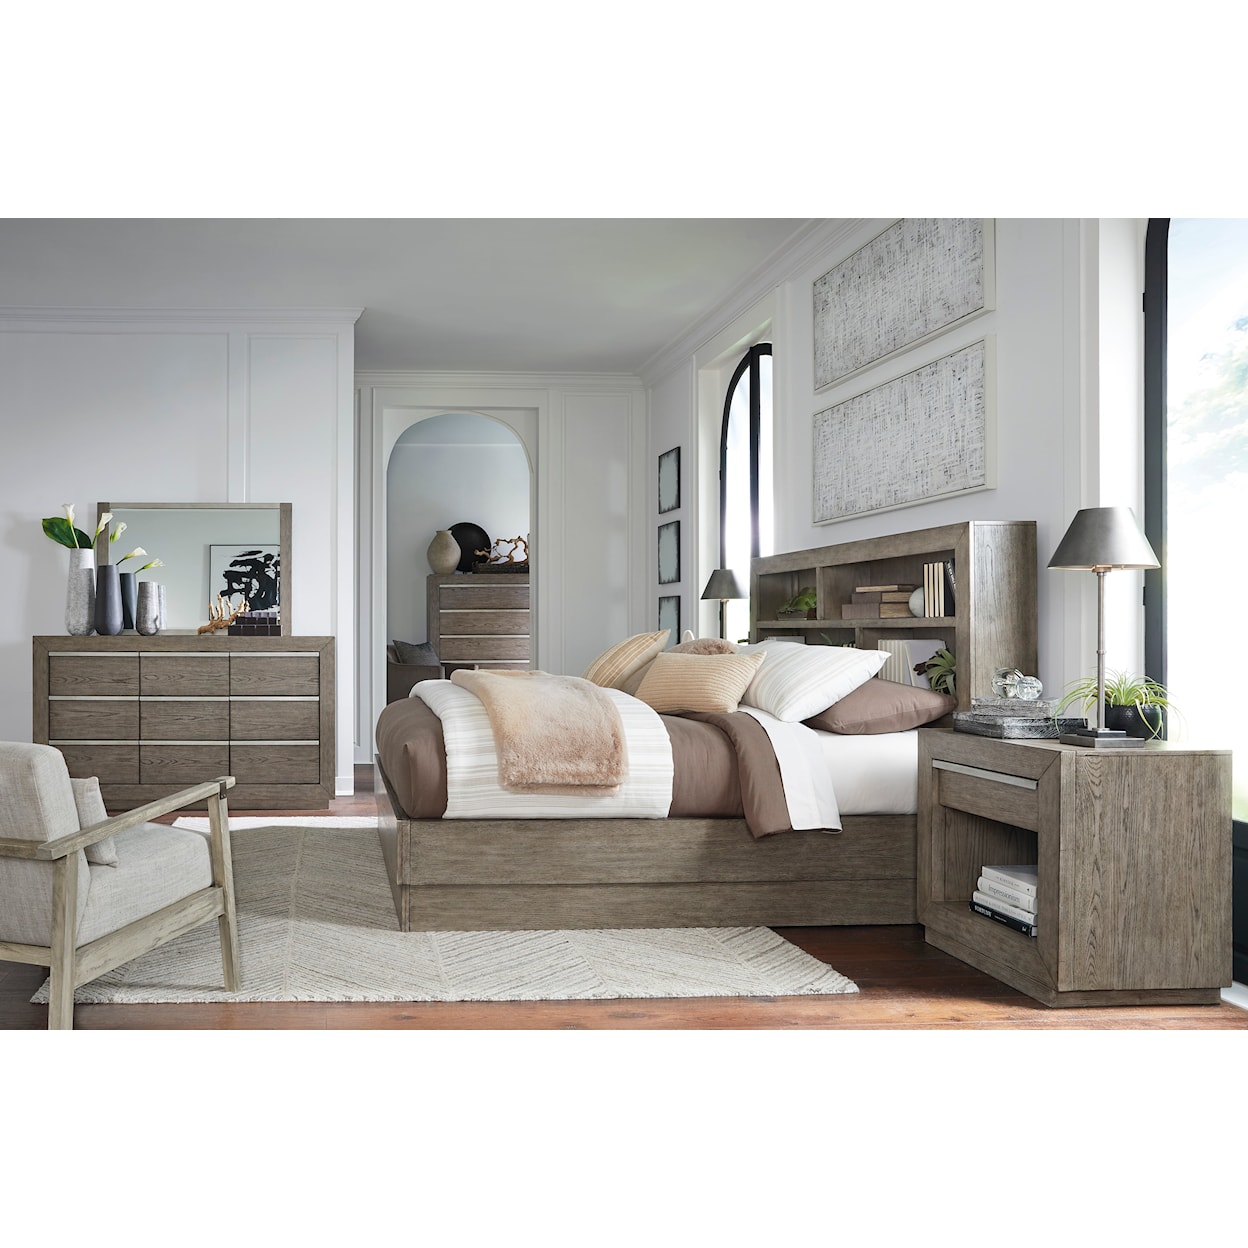 Ashley Furniture Benchcraft Anibecca Dresser and Mirror